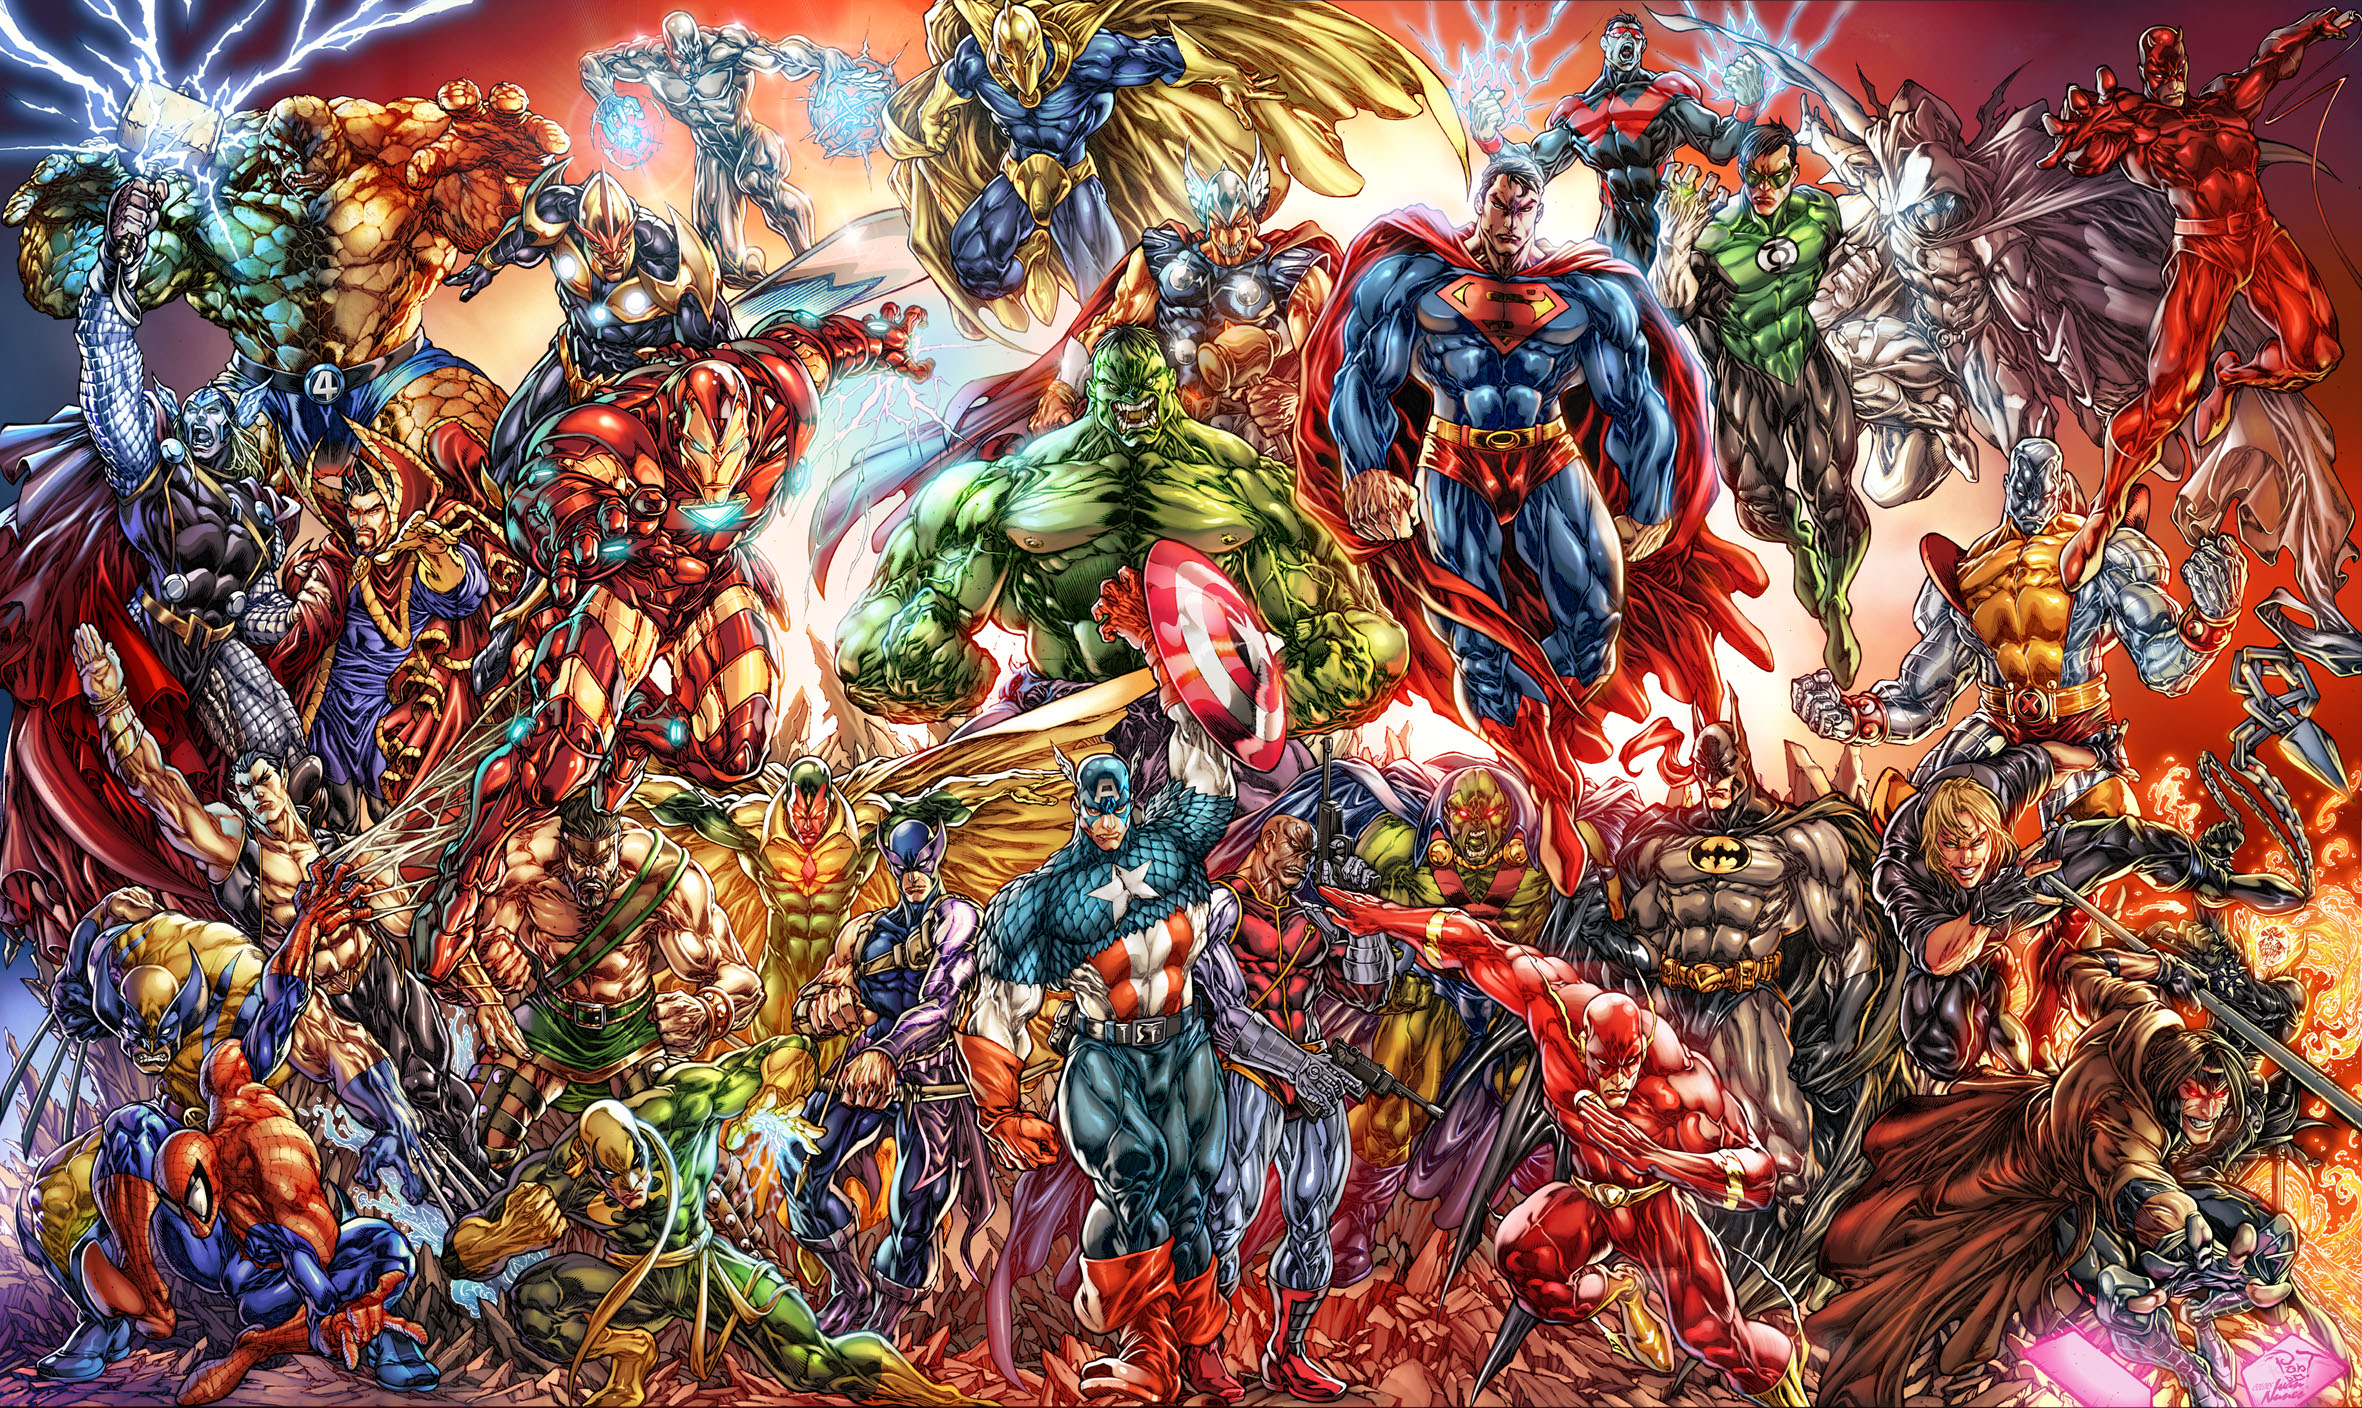 comics, superman, barry allen, dc comics, batman, wolverine, ghost rider, spider man, collage, ben grimm, beta ray bill, captain america, clint barton, colossus, danny rand, daredevil, deathlok, doctor fate (dc comics), doctor strange, flash, gambit (marvel comics), green lantern, hal jordan, hawkeye, hercules (marvel comics), hulk, iron fist (marvel comics), iron man, j'onn j'onzz, longshot (marvel comics), martian manhunter, moon knight, namor the sub mariner, nightwing, nova (marvel comics), peter parker, silver surfer, sub mariner, thing (marvel comics), thor, vision (marvel comics), wonder man